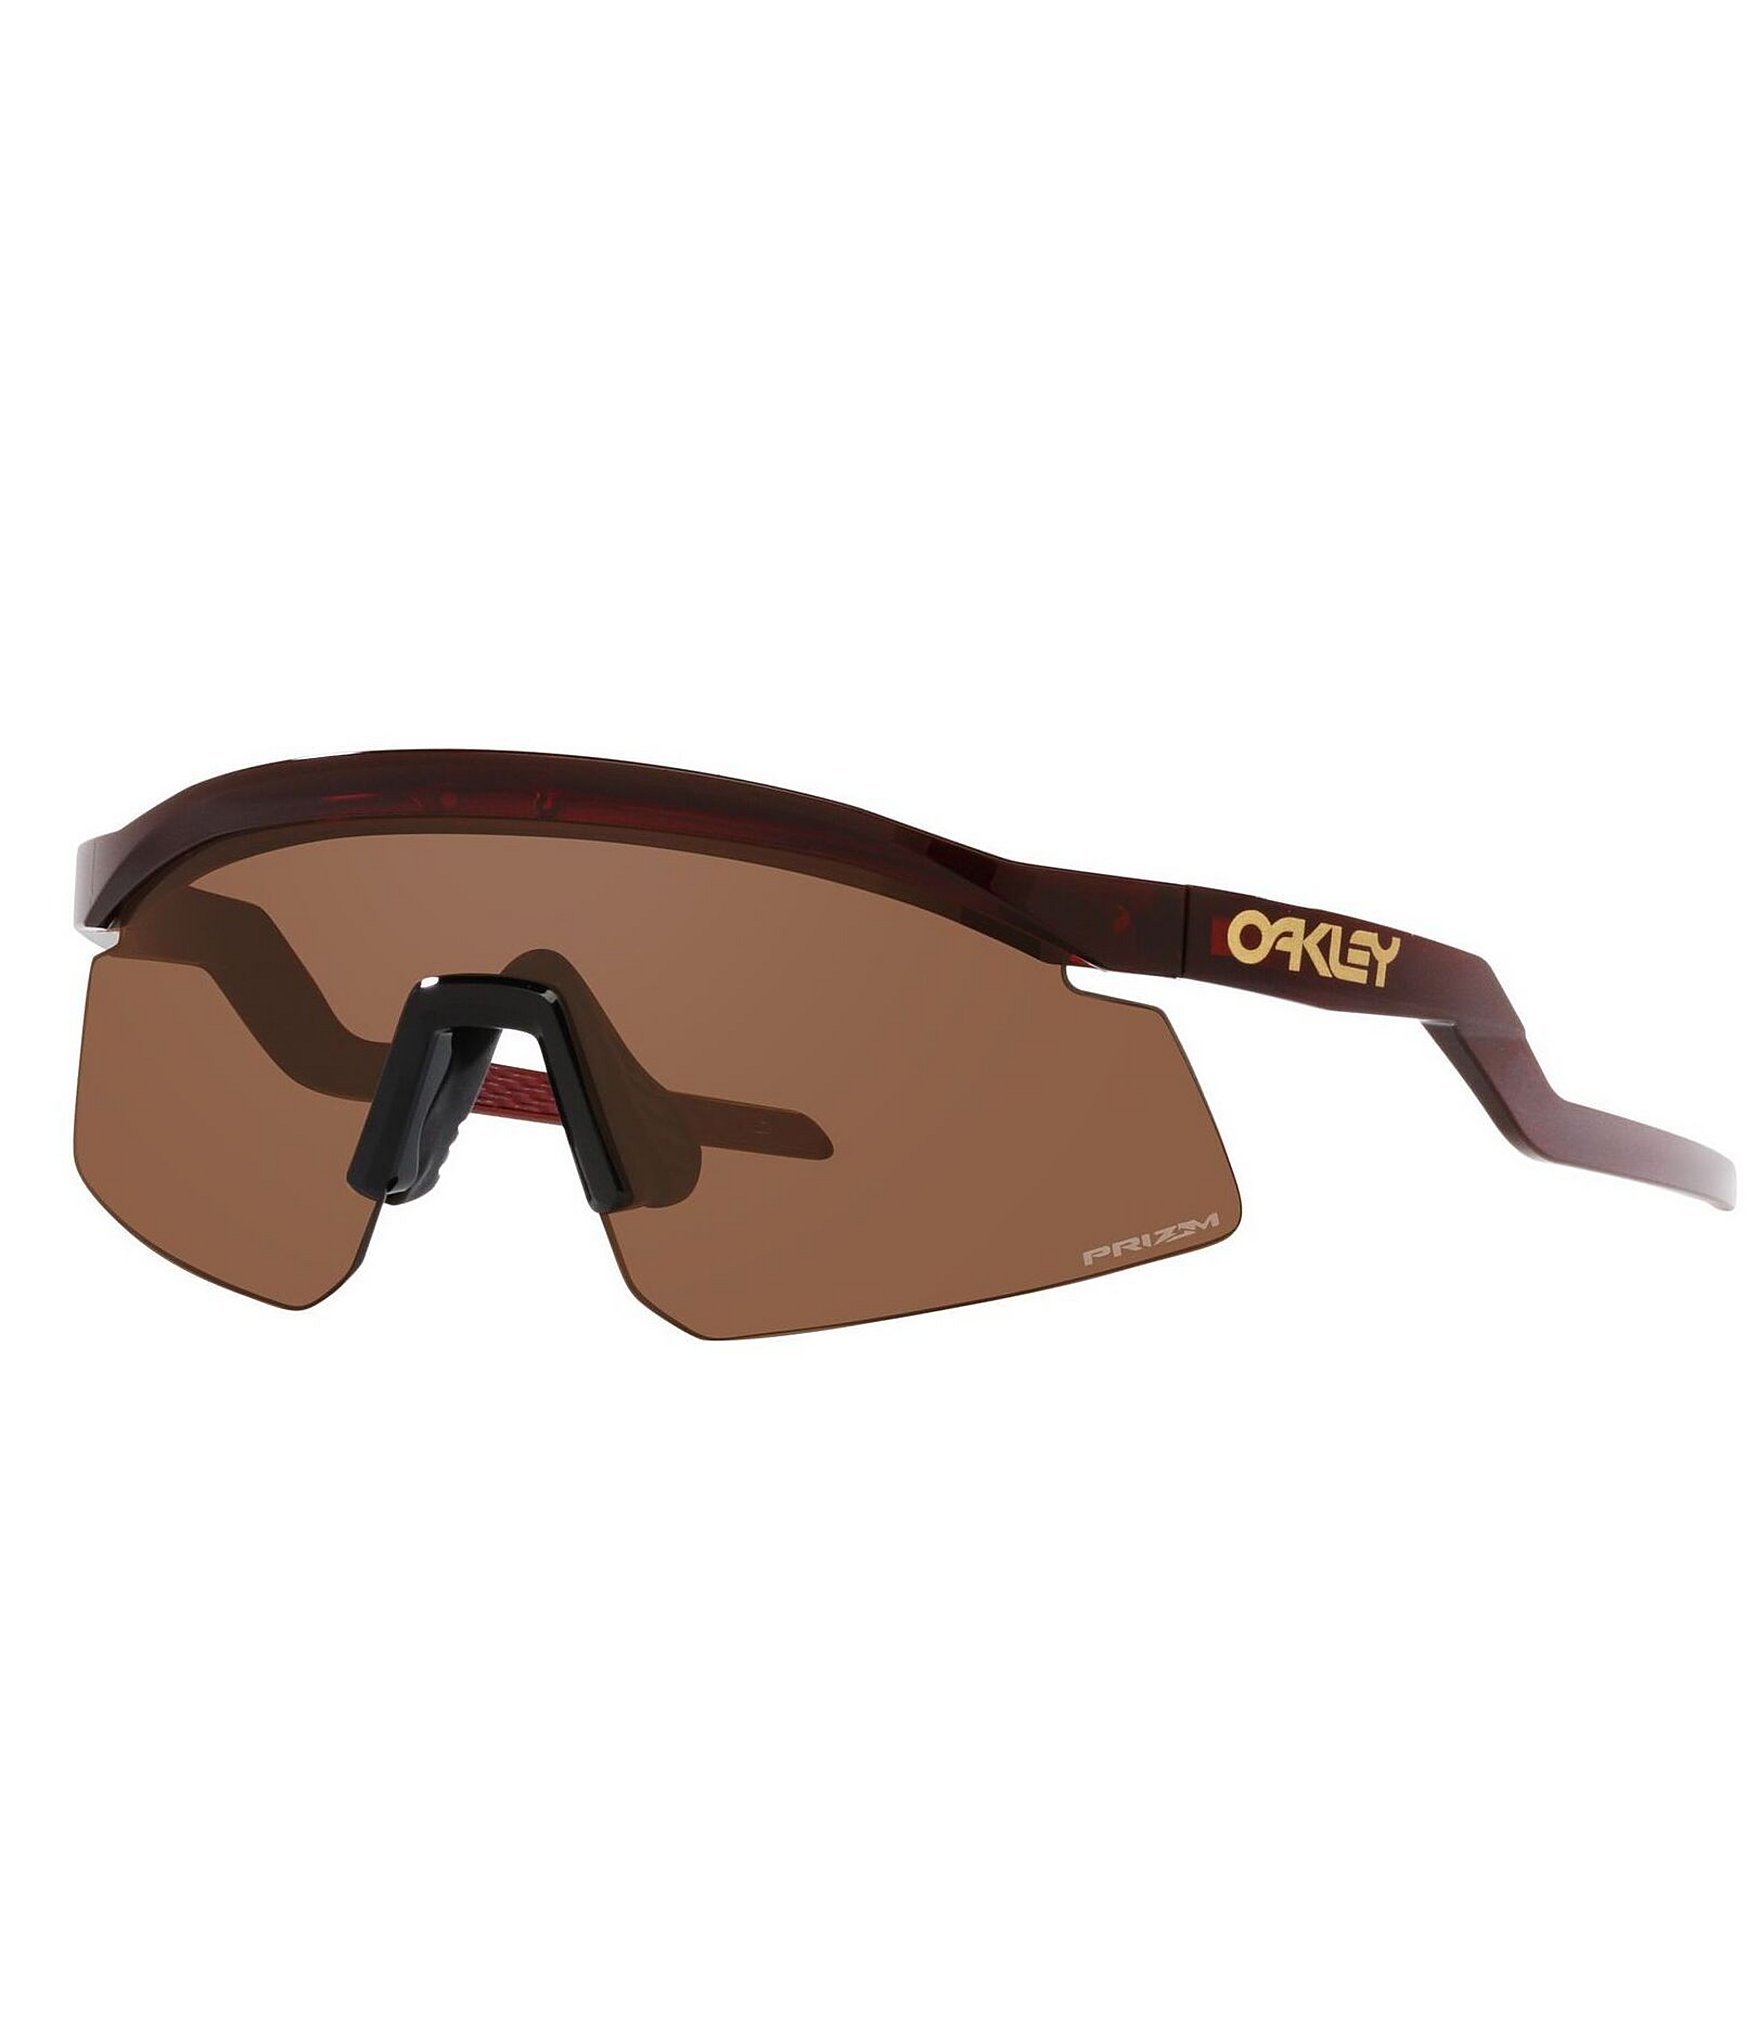 Oakley Men's OO9229 37mm Irregular Shield Sunglasses | Dillard's